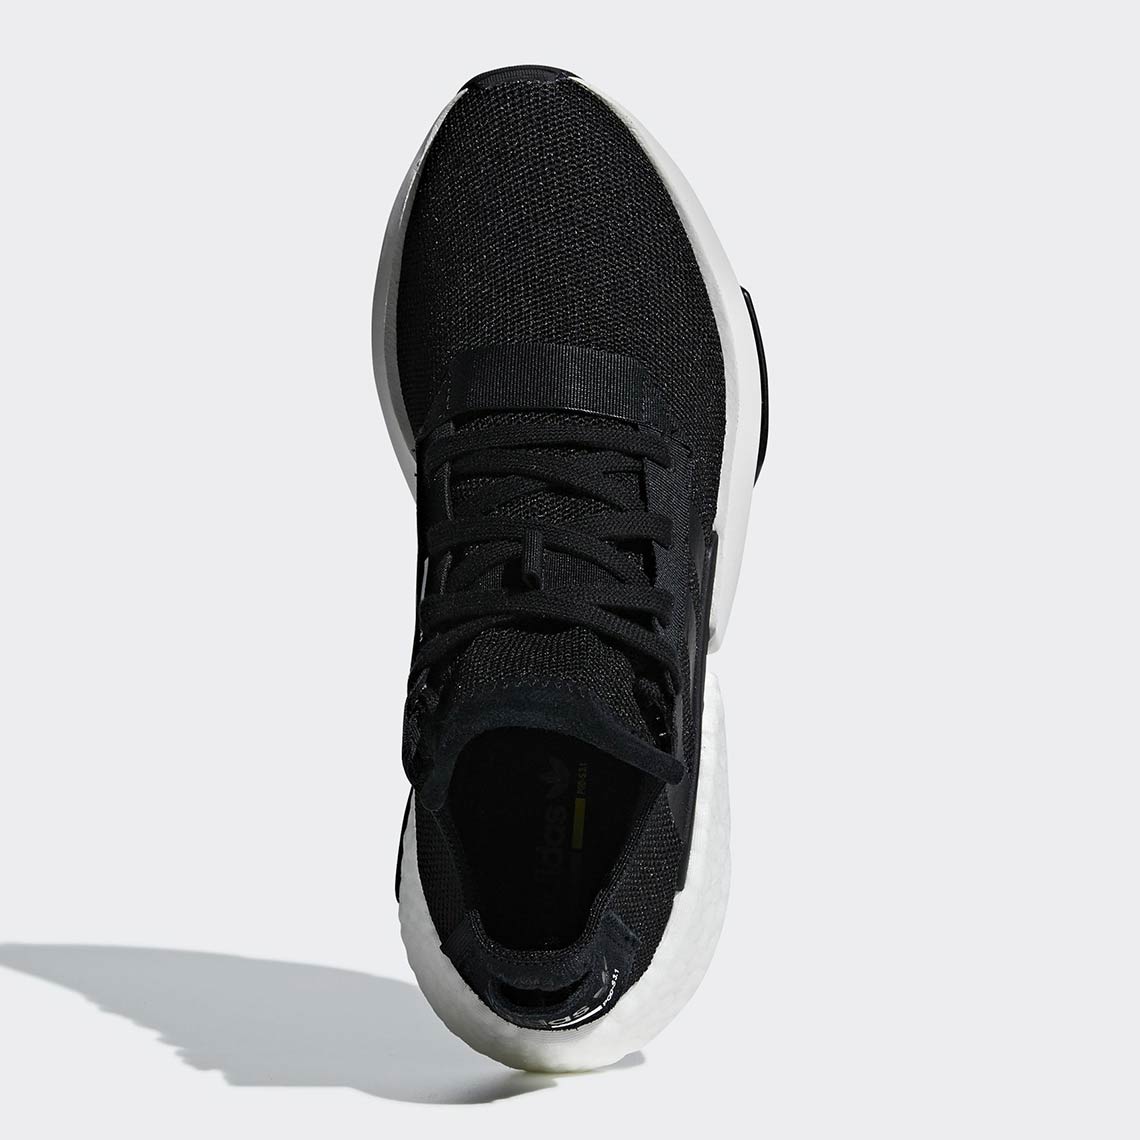 Adidas Pod S3.1 Black White B37366 1